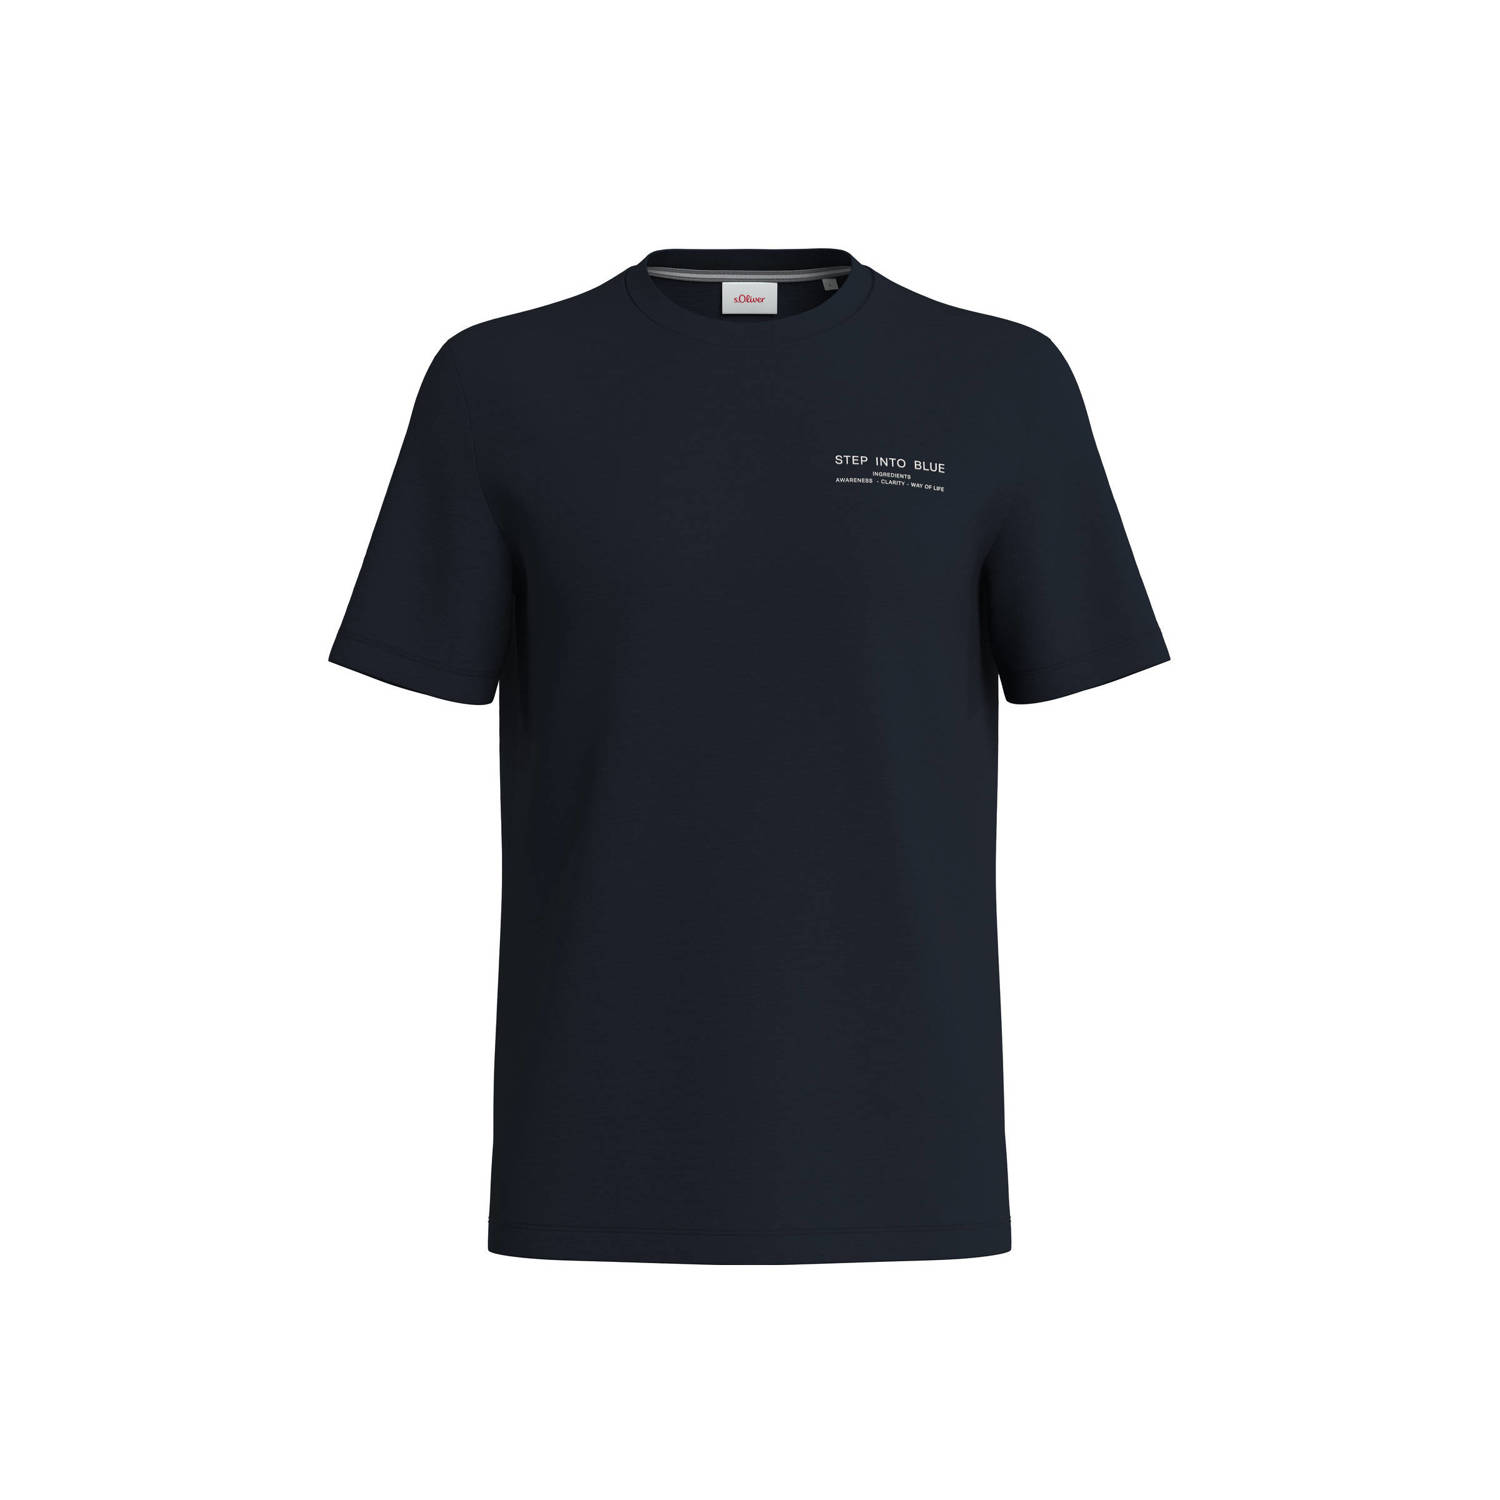 S.Oliver Big Size T-shirt Plus Size met printopdruk donkerblauw